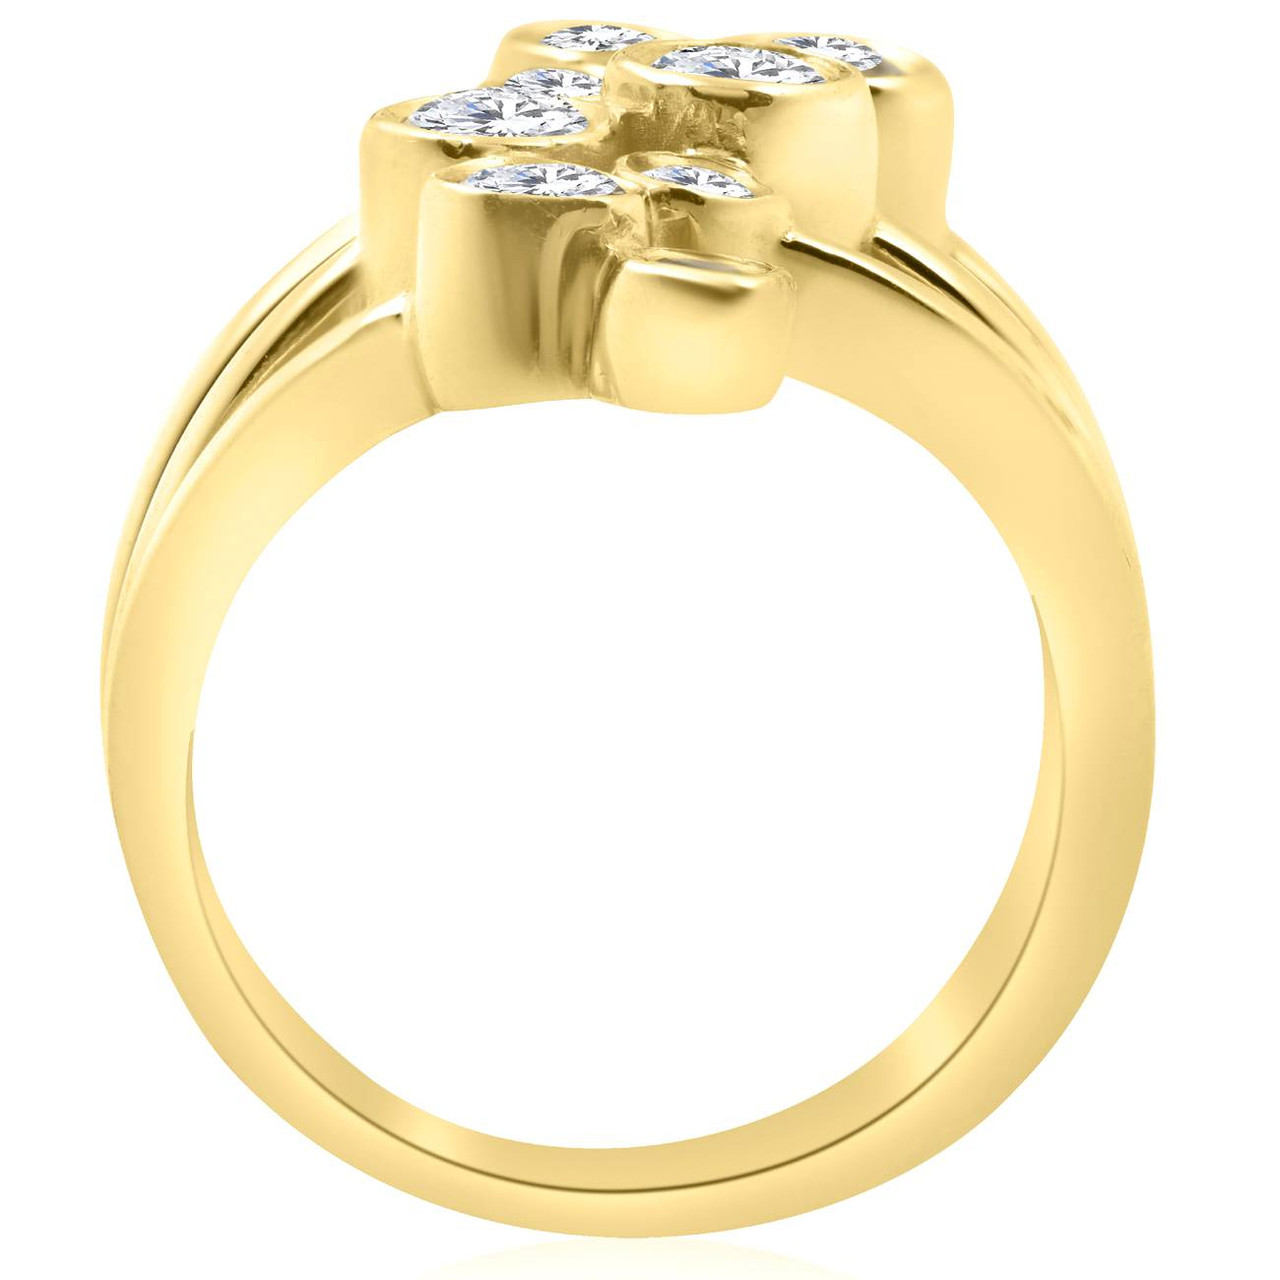 1 Gram Gold Forming Superior Quality Hand-crafted Design Ring For Men -  Style A973 at Rs 1250.00 | Gold Forming Jewelry, सोने का पानी चढ़े हुए  गहने, गोल्ड फॉर्मिंग ज्वेलरी - Soni